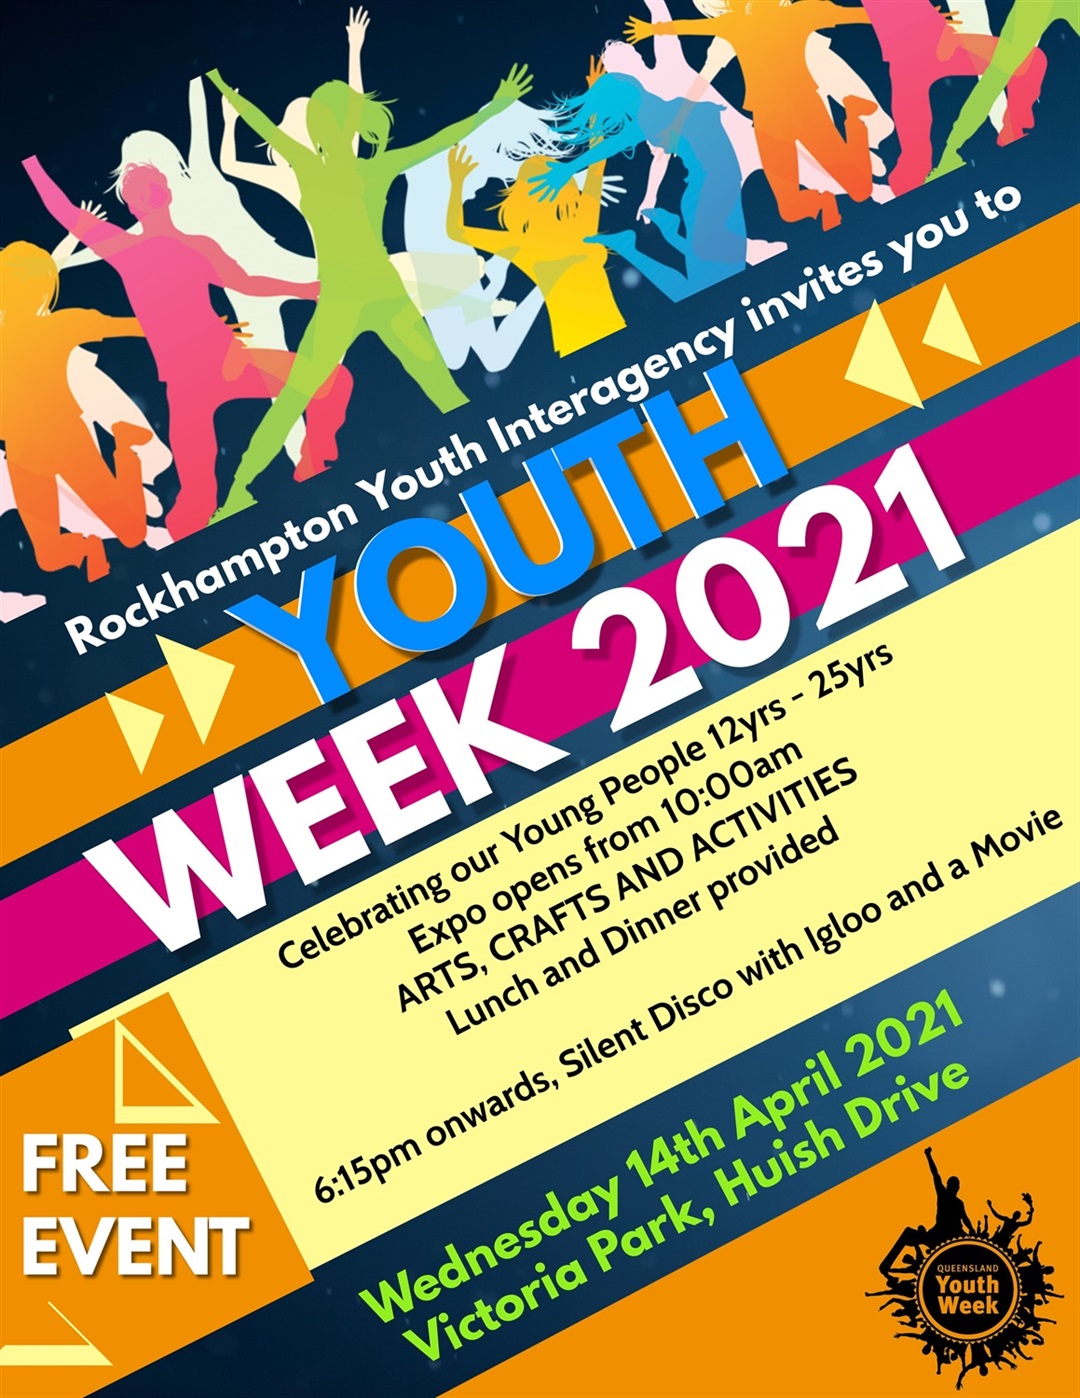 Youth Week Rockhampton Regional Council